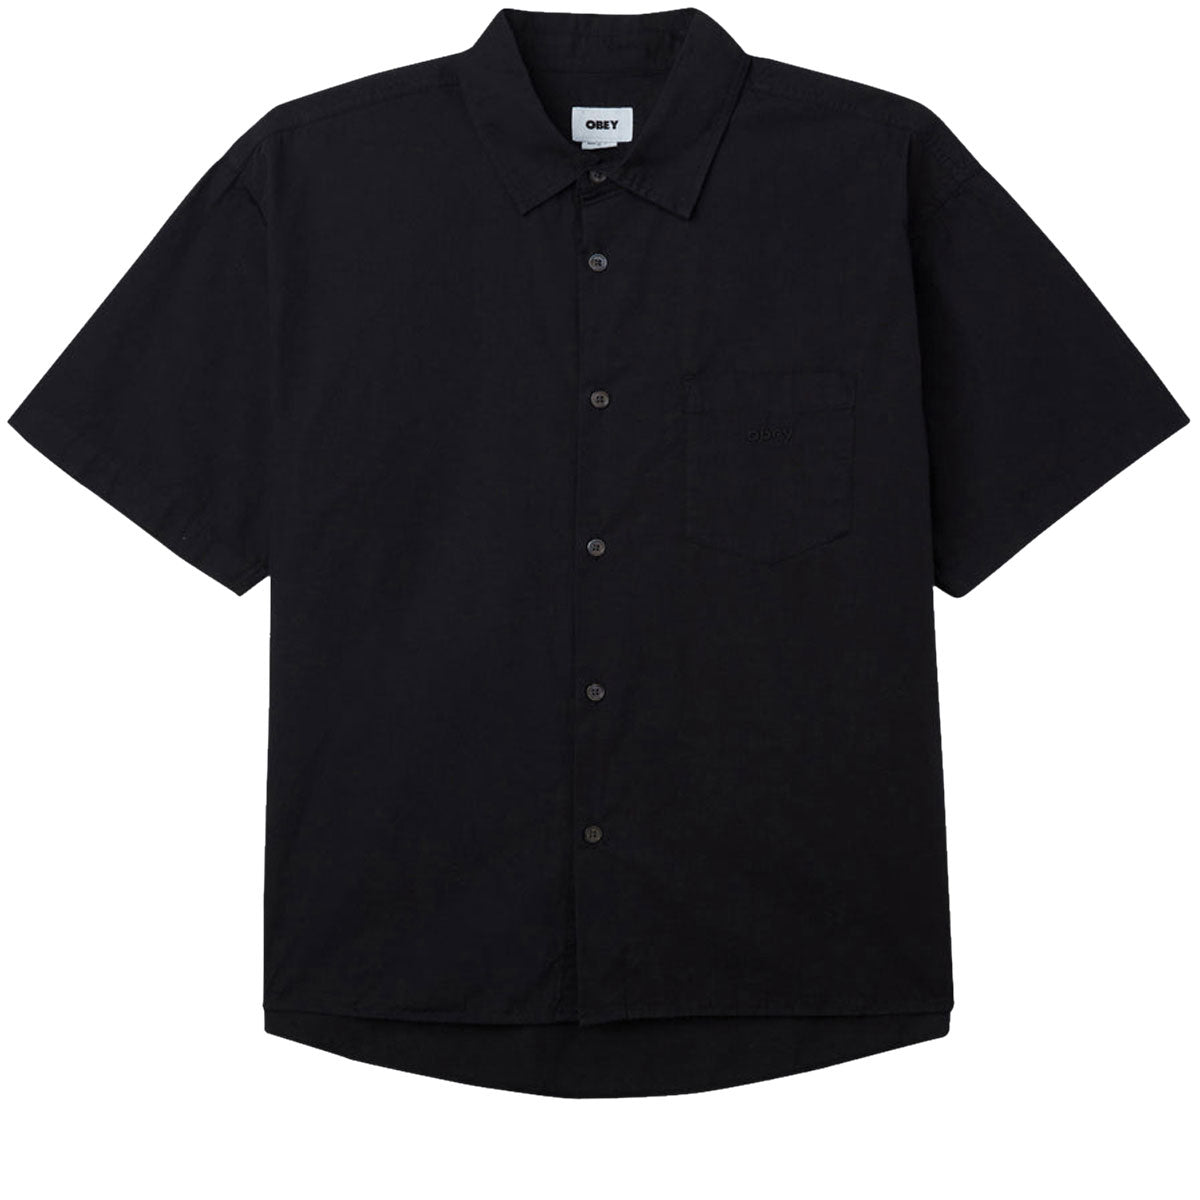 Obey Pigment Lowercase Woven Shirt - Pigment Vintage Black image 1